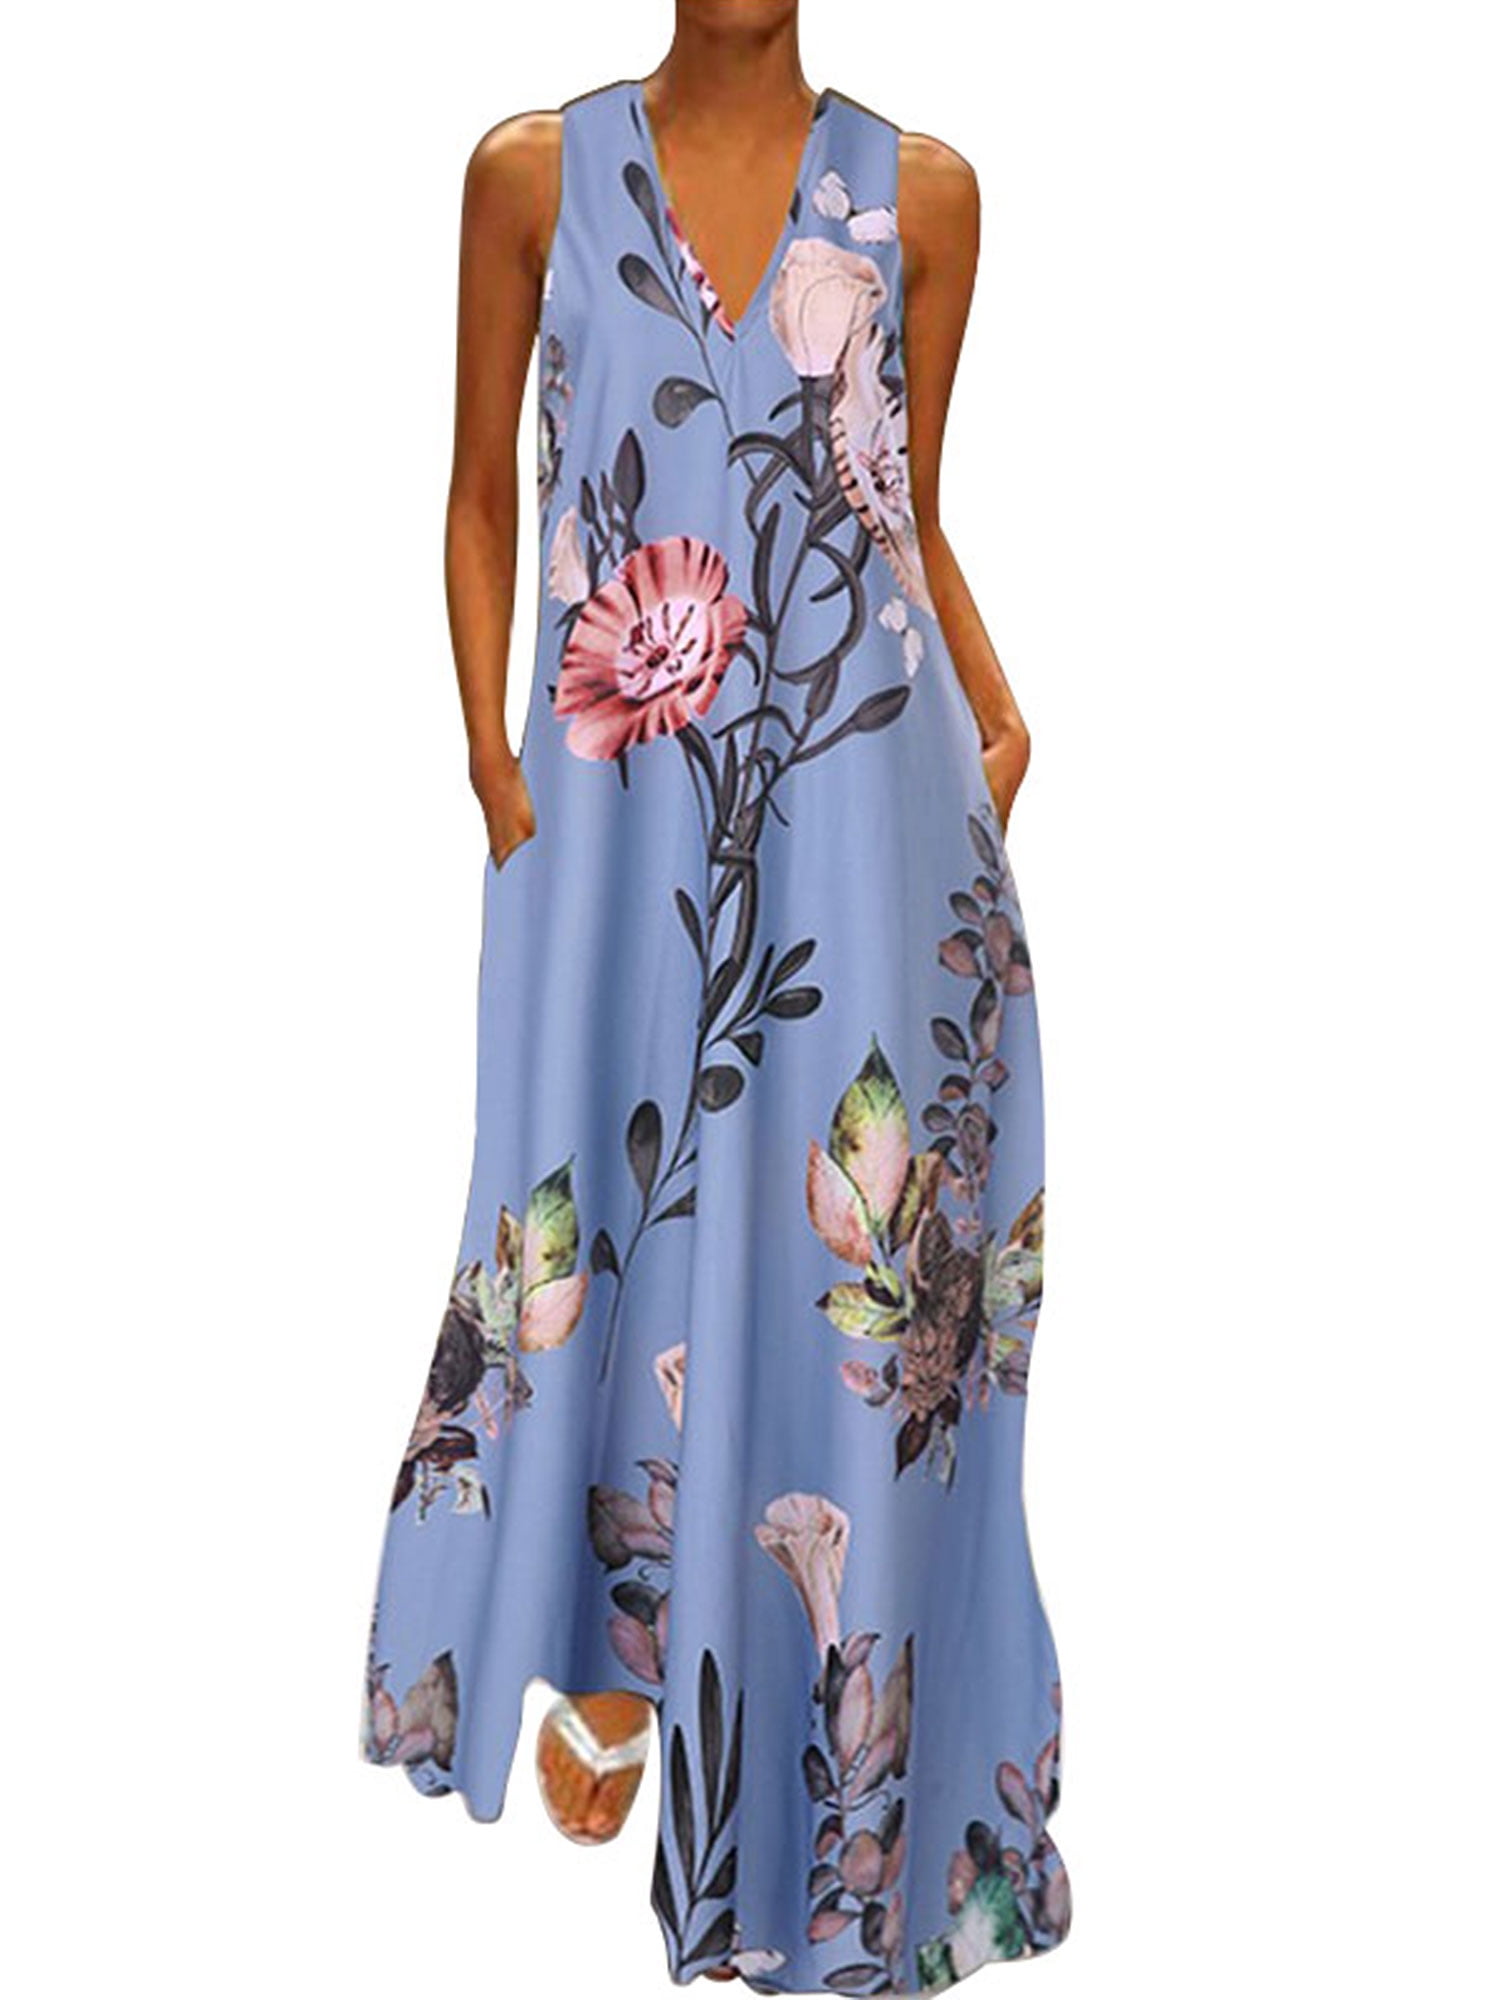 Women Plus Size Summer V Neck Floral Print Boho Sleeveless Party Maxi Dress